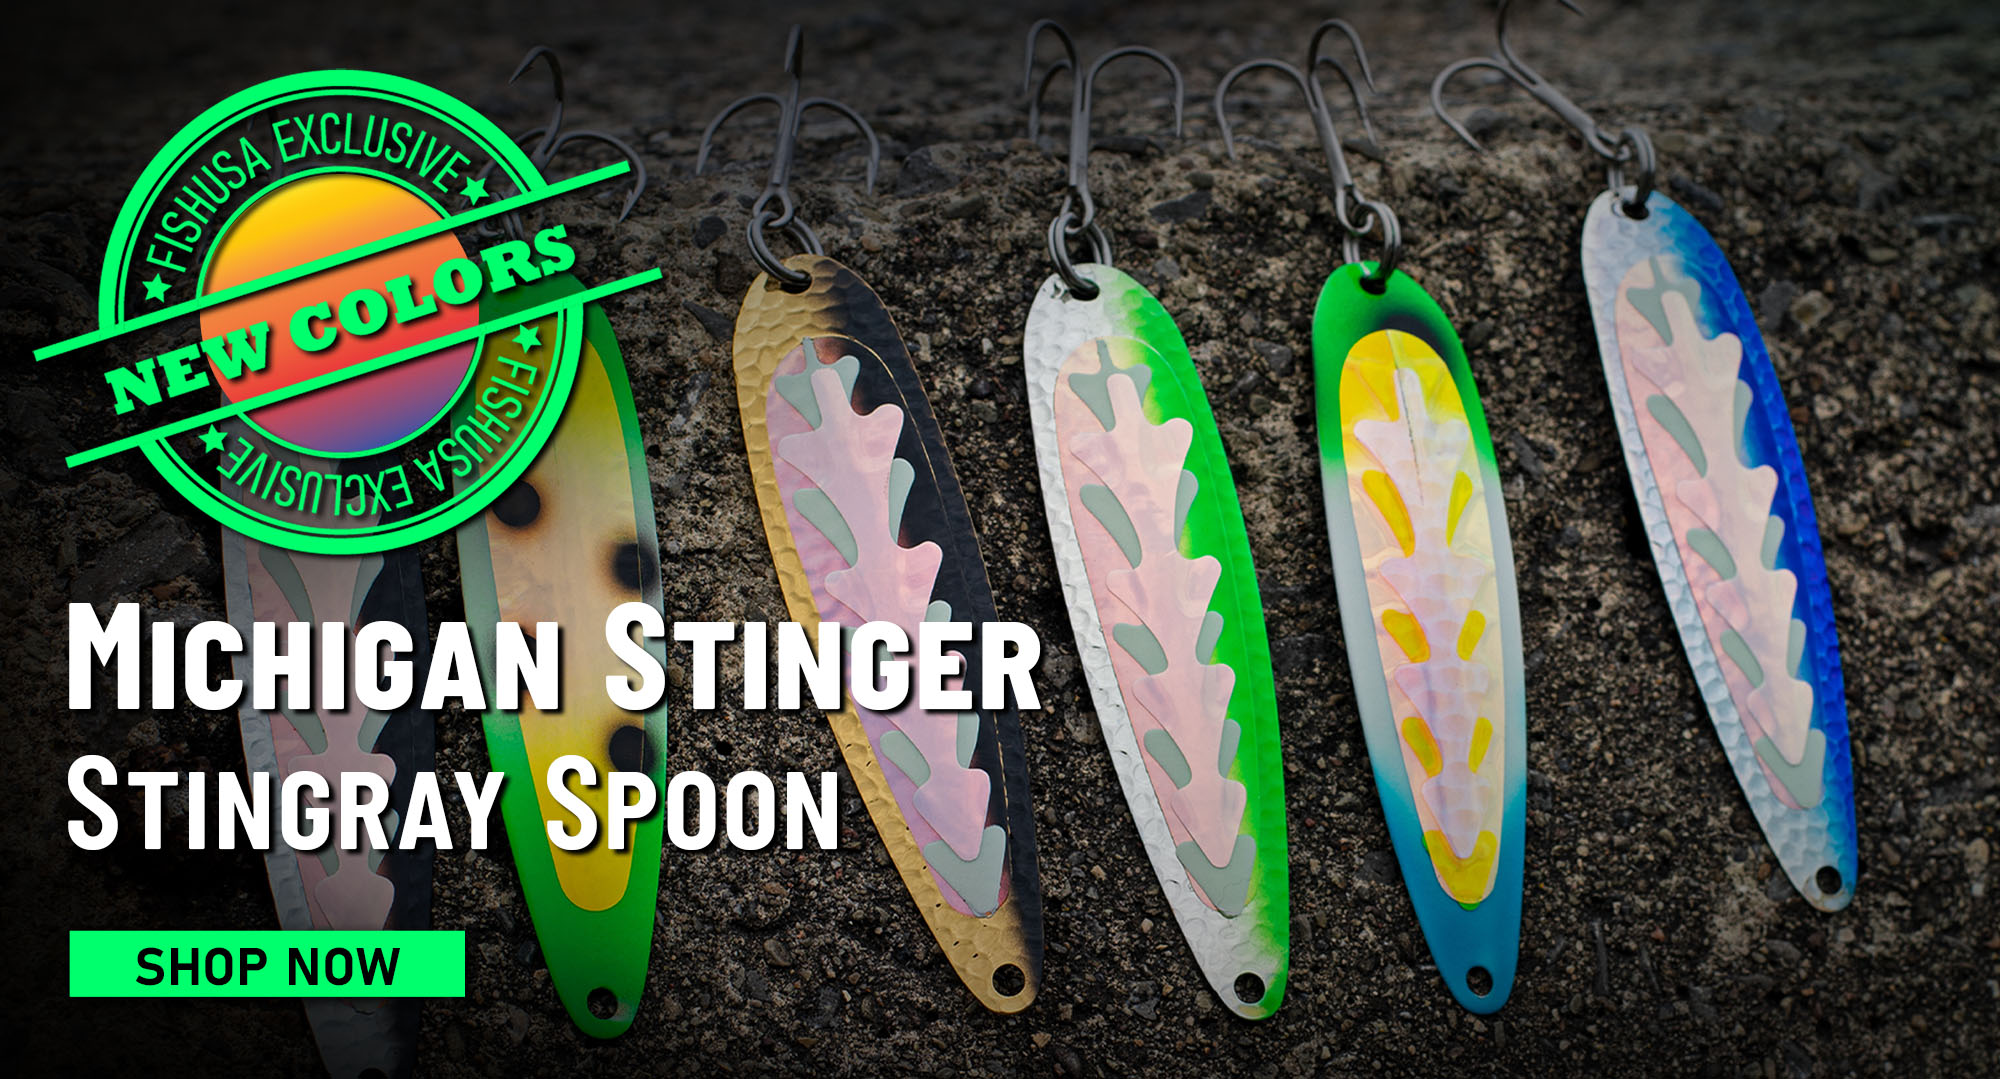 New Exclusive Colors! Michigan Stinger Stingray Spoon Shop Now